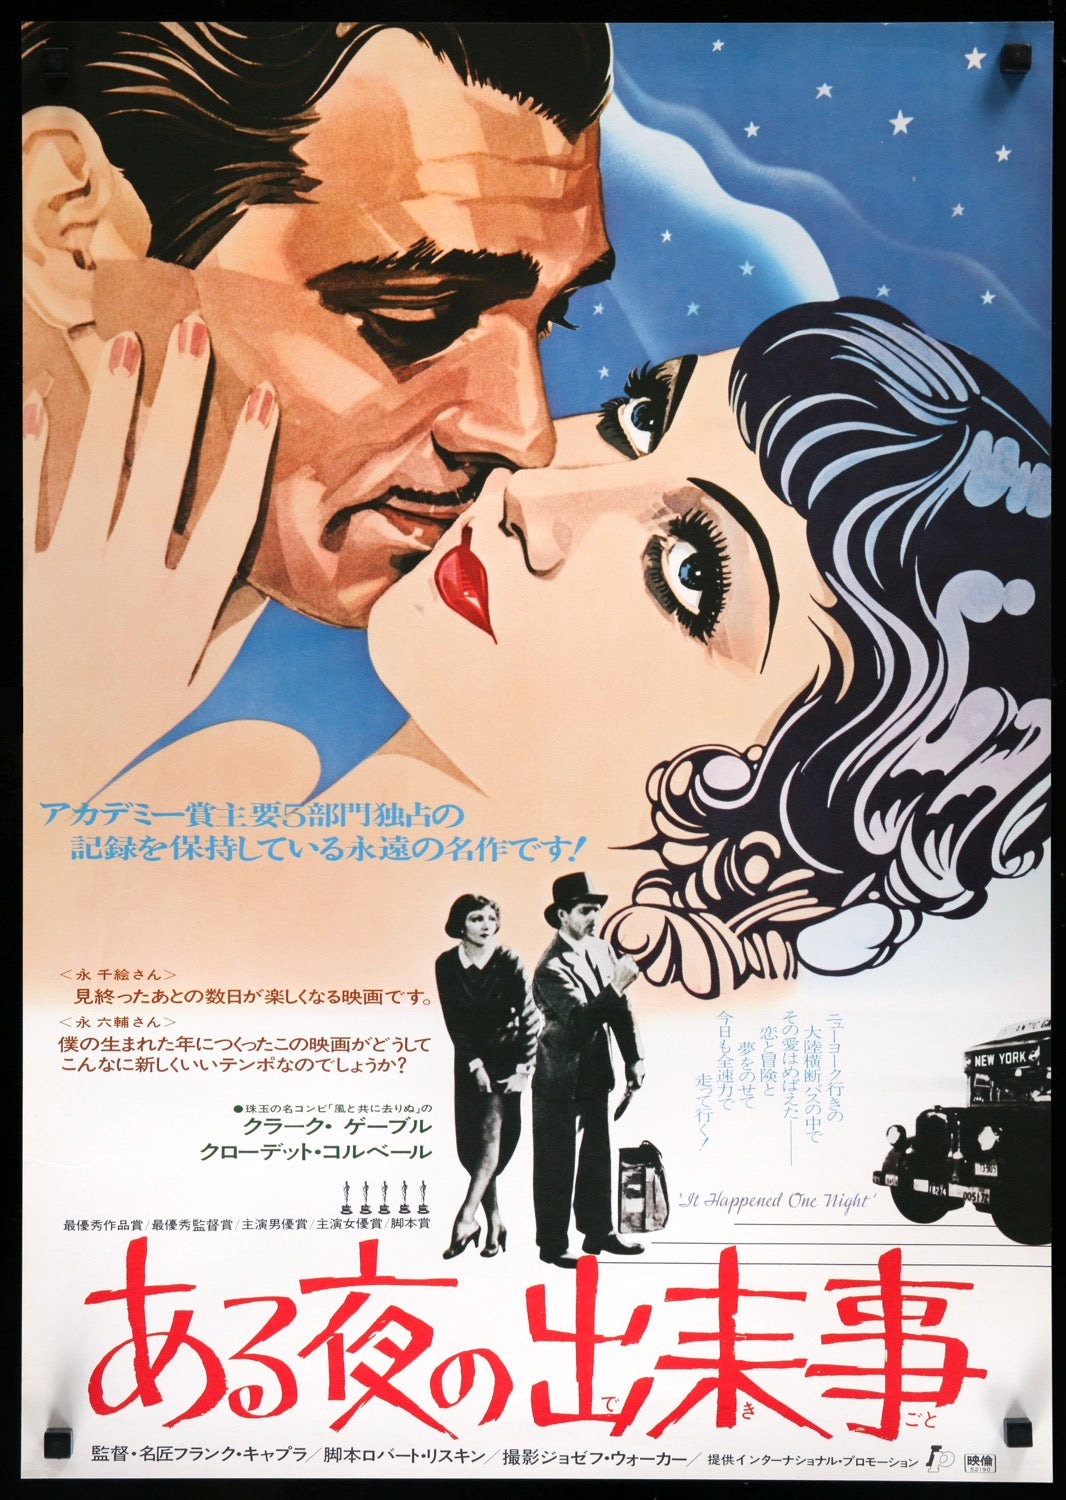 It Happened One Night (1934) original movie poster for sale at Original Film Art